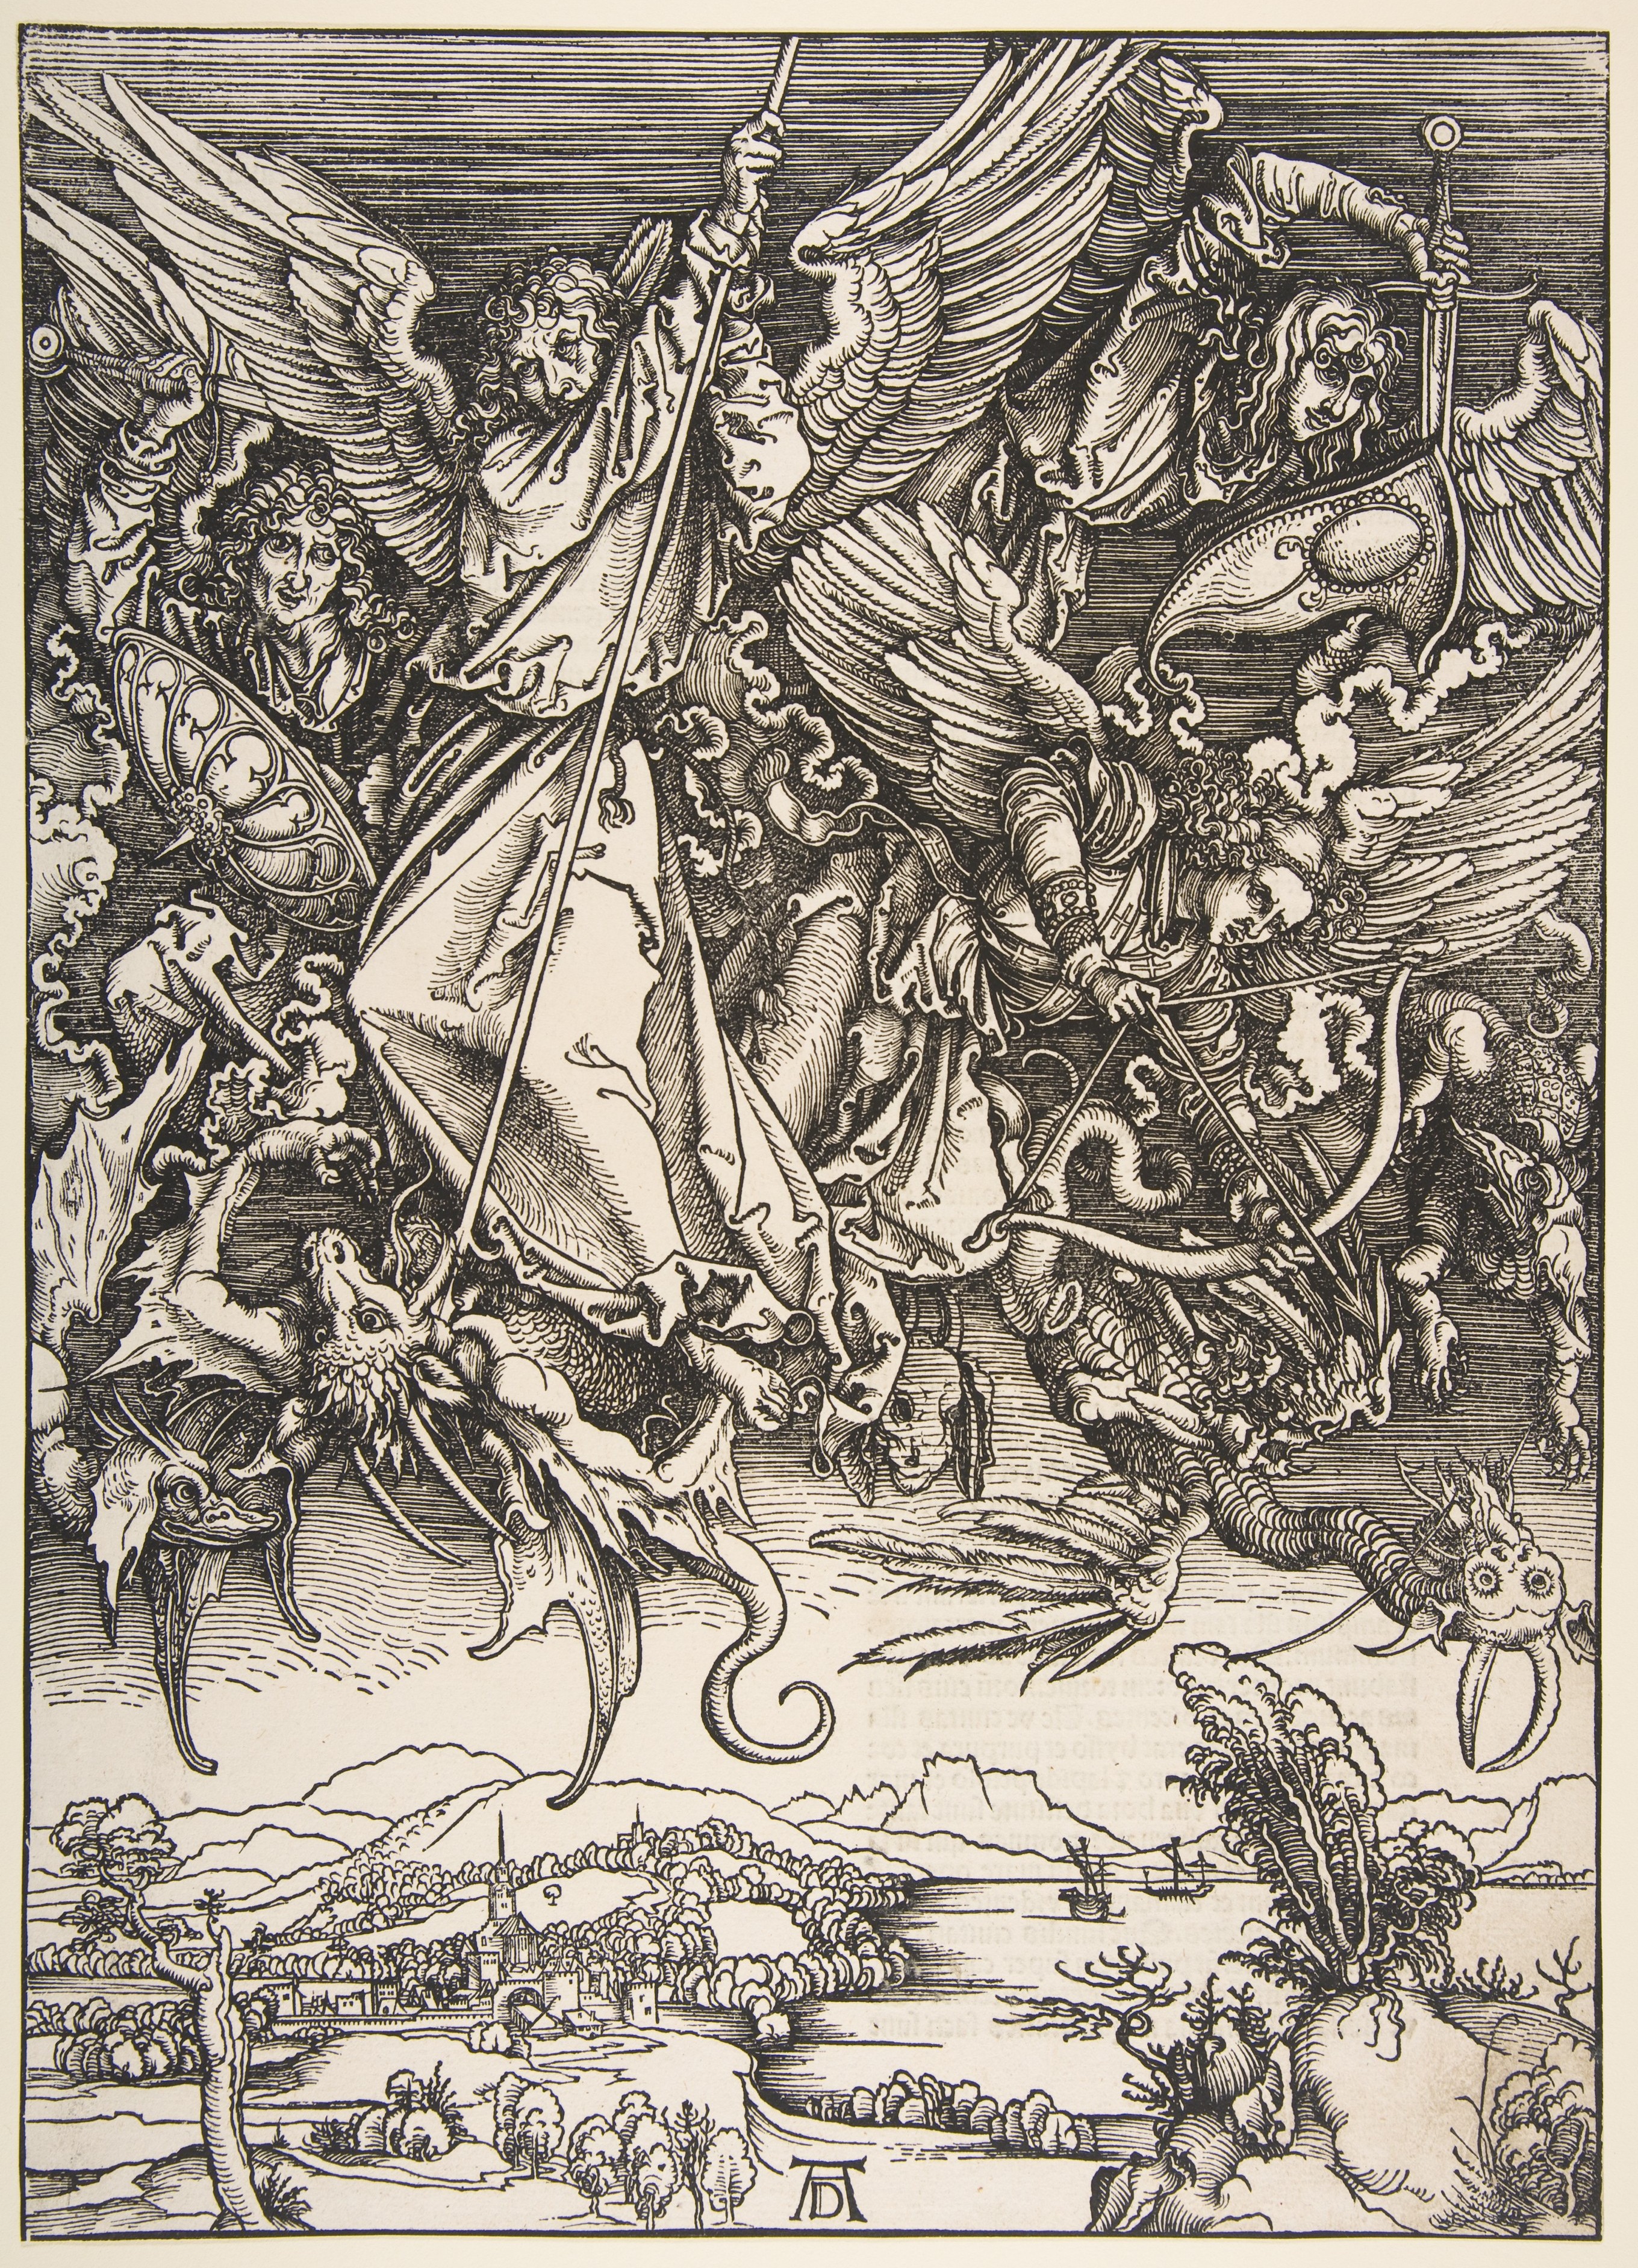 Saint Michael Fighting the Dragon by Albrecht Dürer - c. 1496-1498, printed 1511 - 39.1 x 28 cm Baltimore Museum of Art